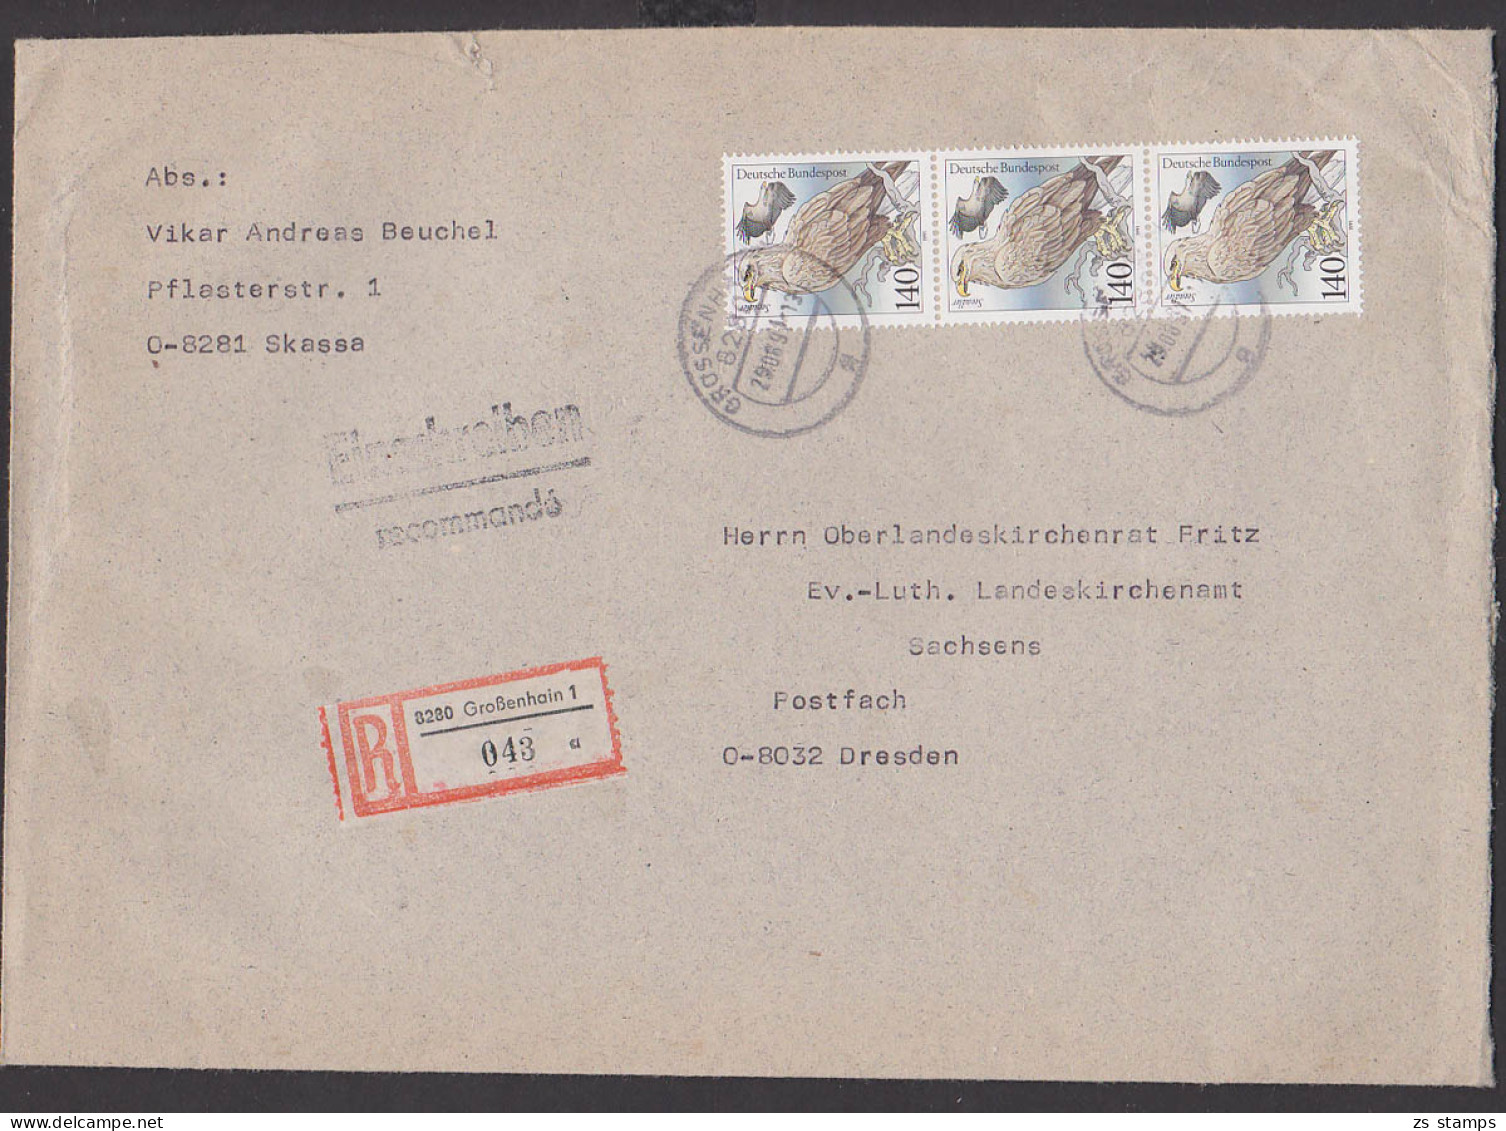 Seeadler Haliaeetus Albicilla 140 Pf Bundesrepublik Germany R-Brief Großenhain Im VGO 29.8.91 - Aigles & Rapaces Diurnes